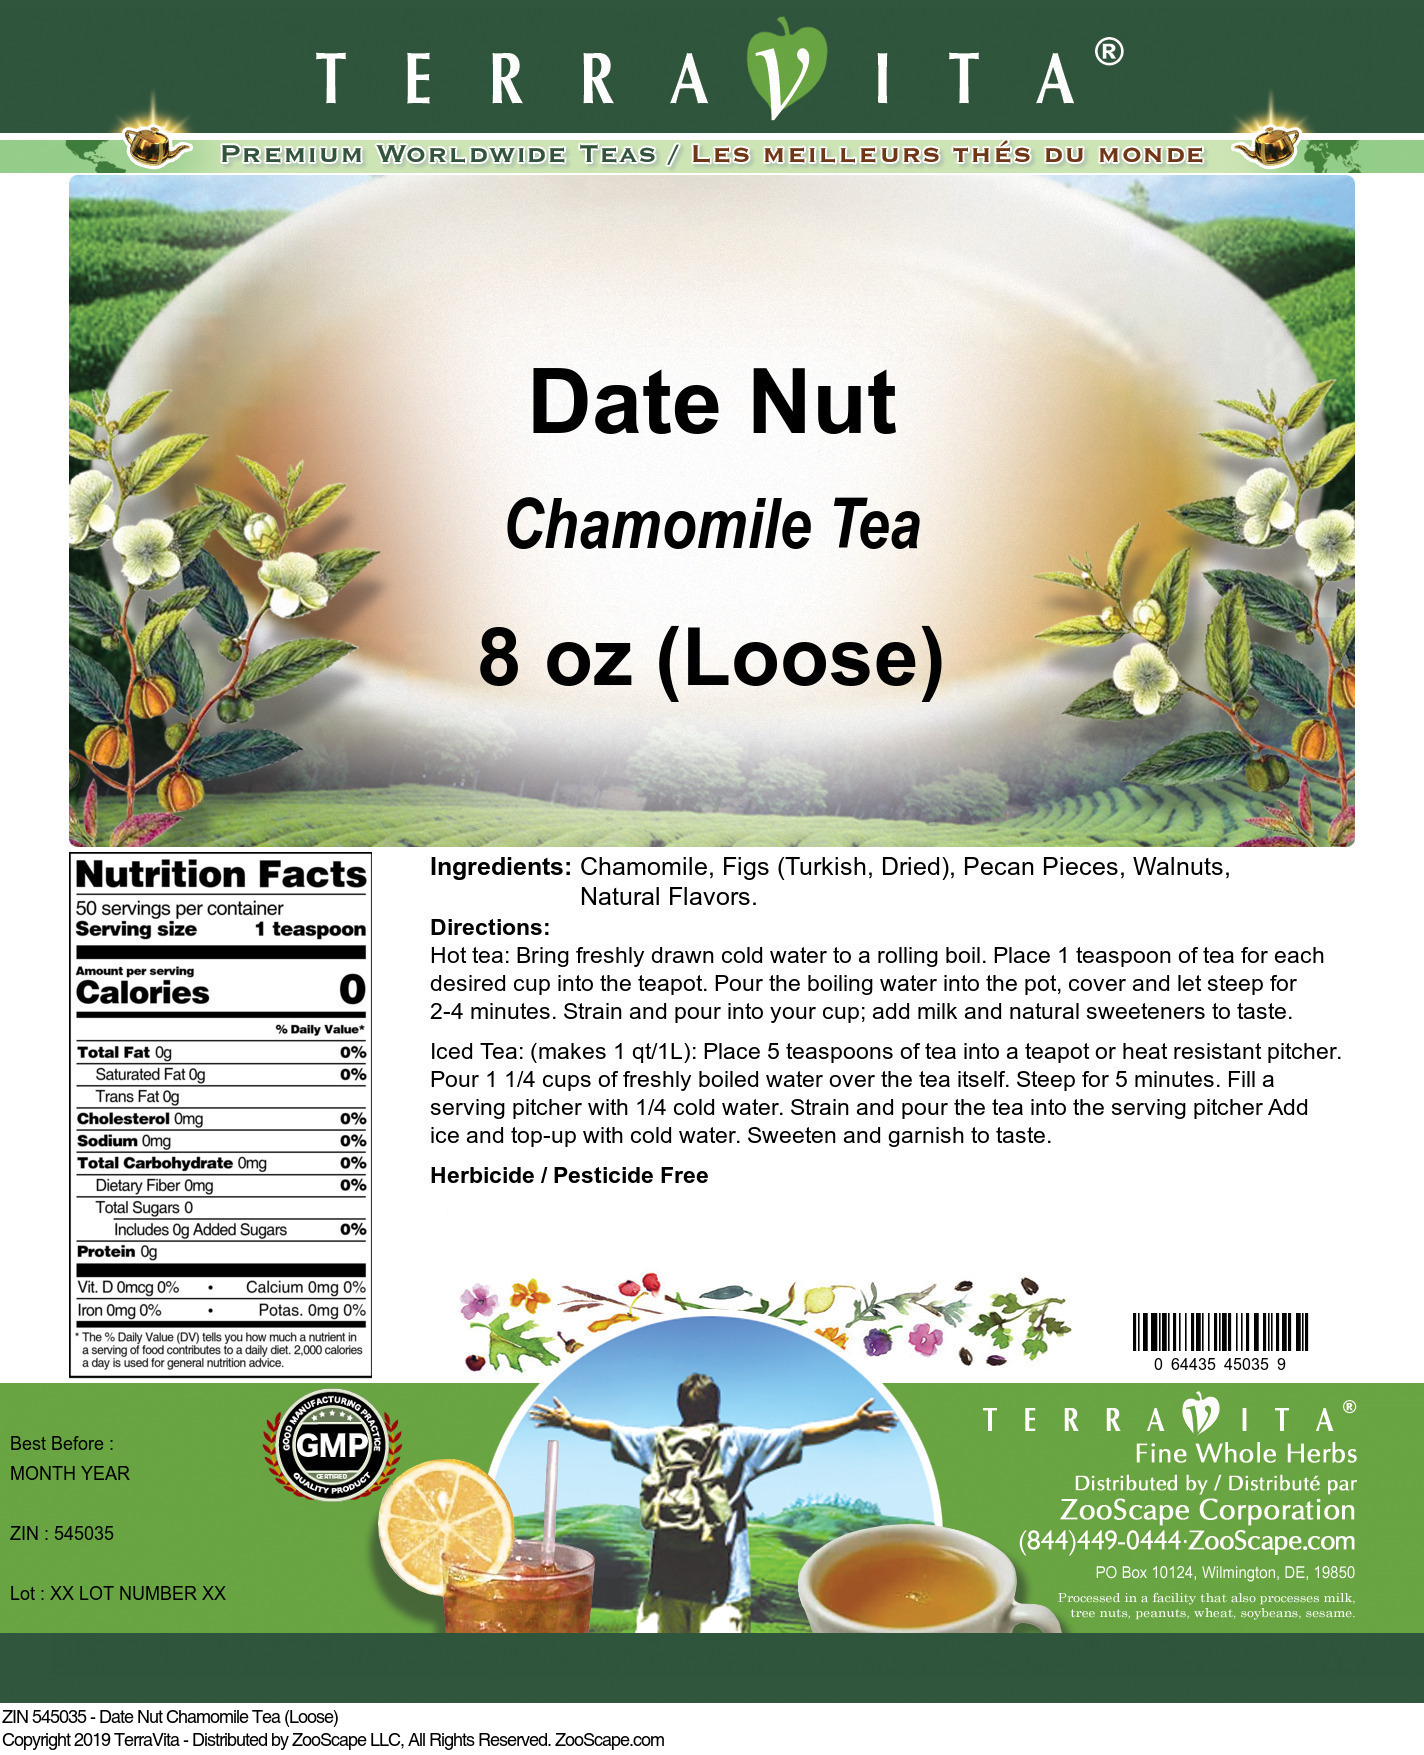 Date Nut Chamomile Tea (Loose) - Label